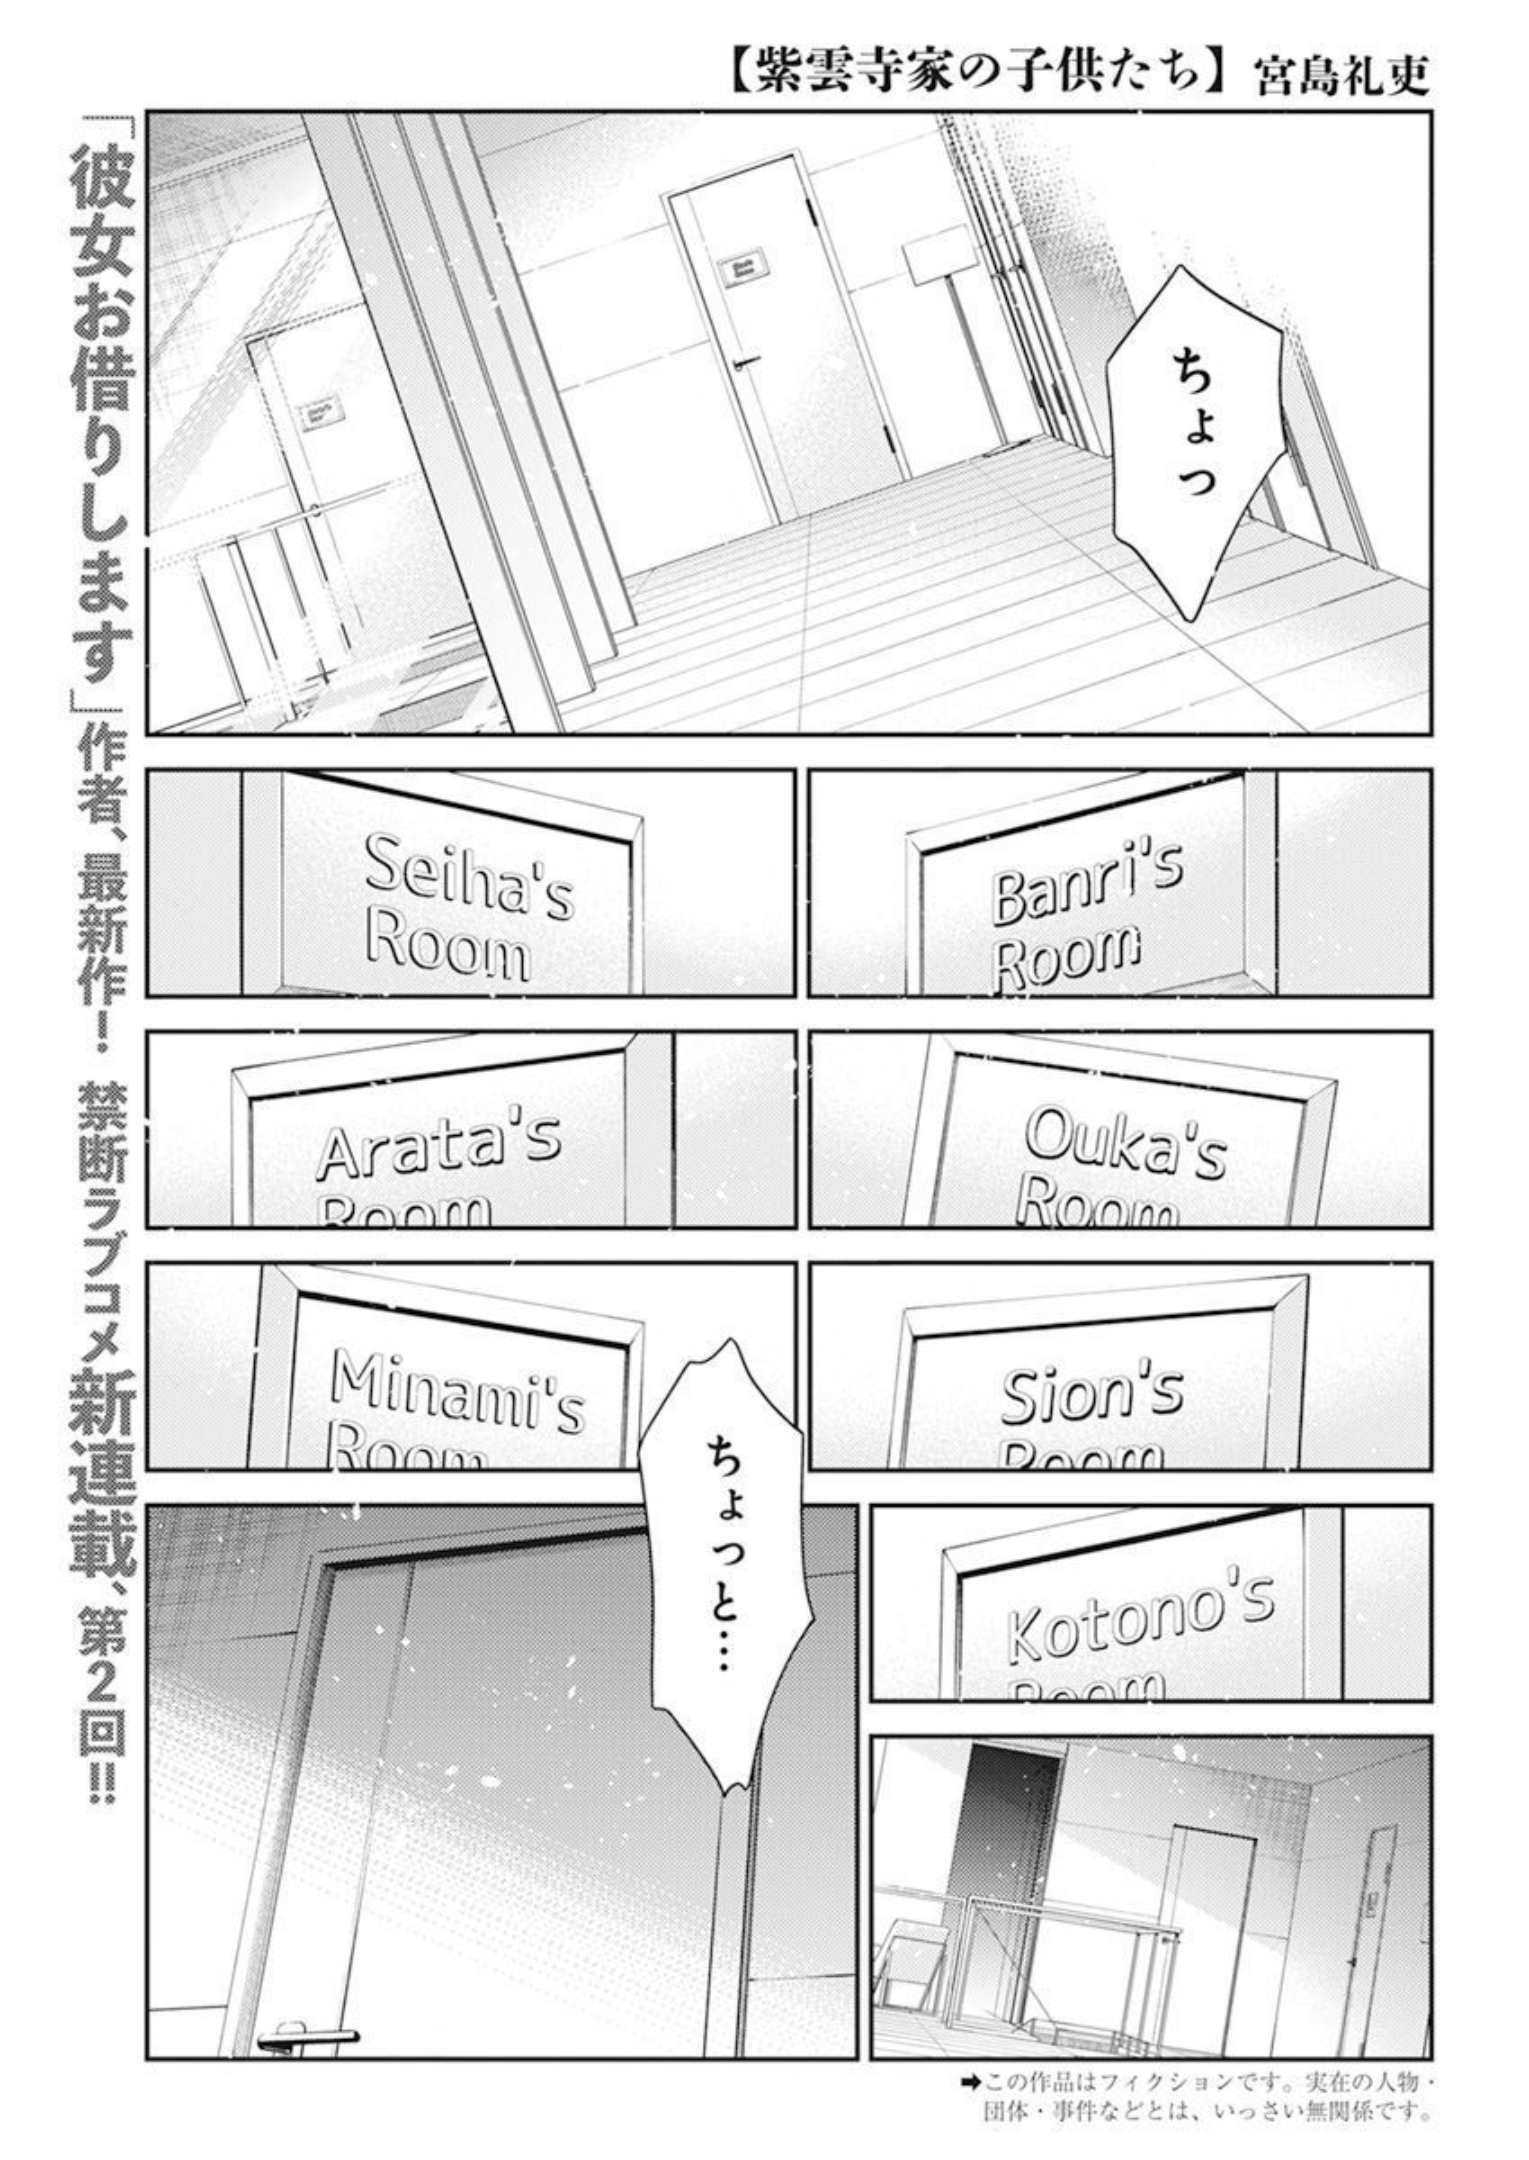 Shiunji-ke no Kodomotachi (Children of the Shiunji Family) - Chapter 02 - Page 2